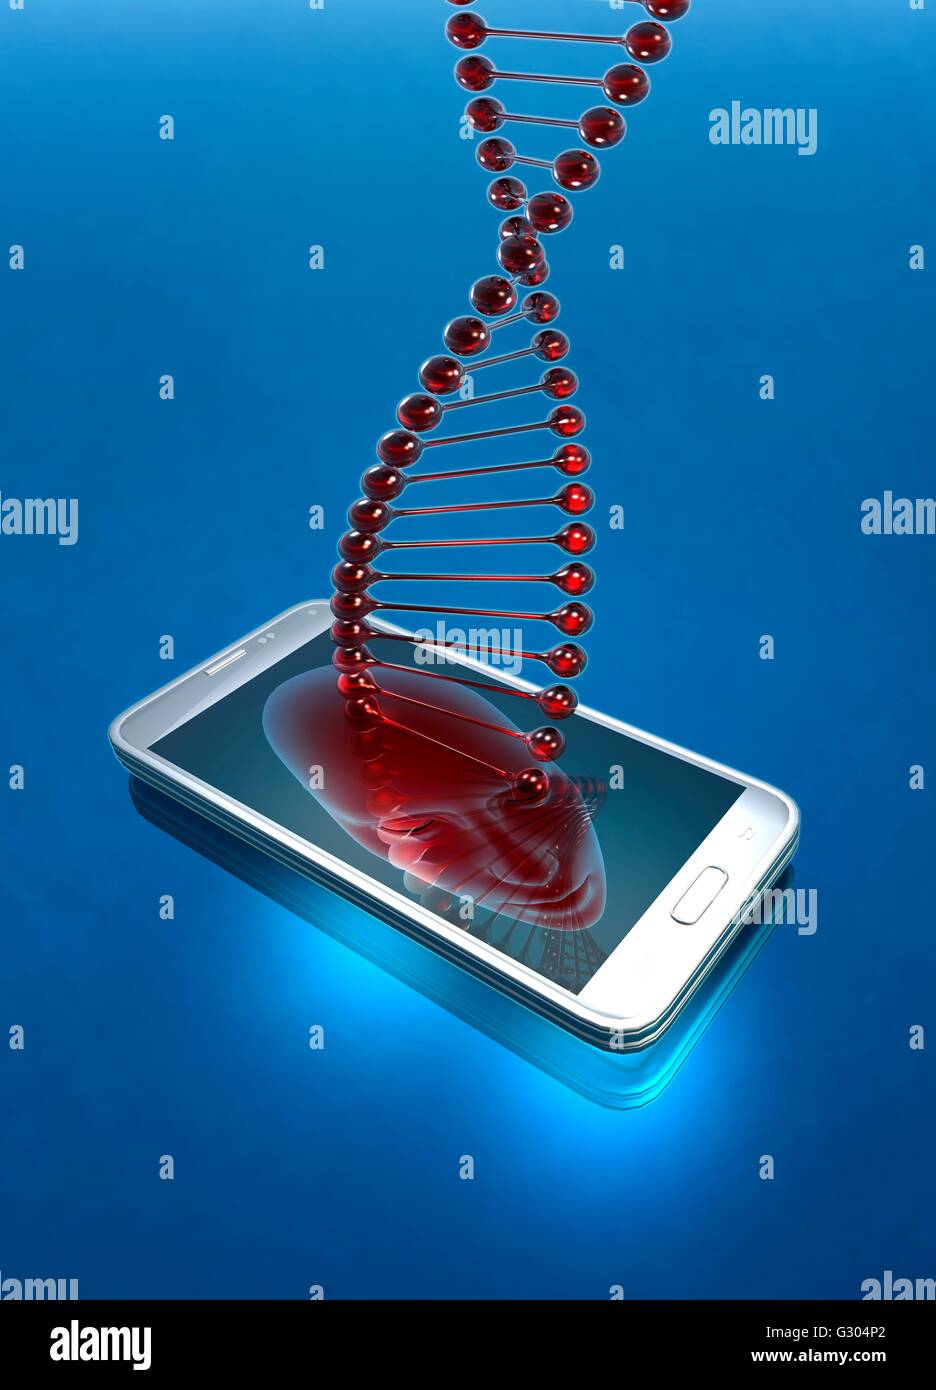 Dna (deoxyribonucleic acid) strand and smartphone, illustration. Stock Photo